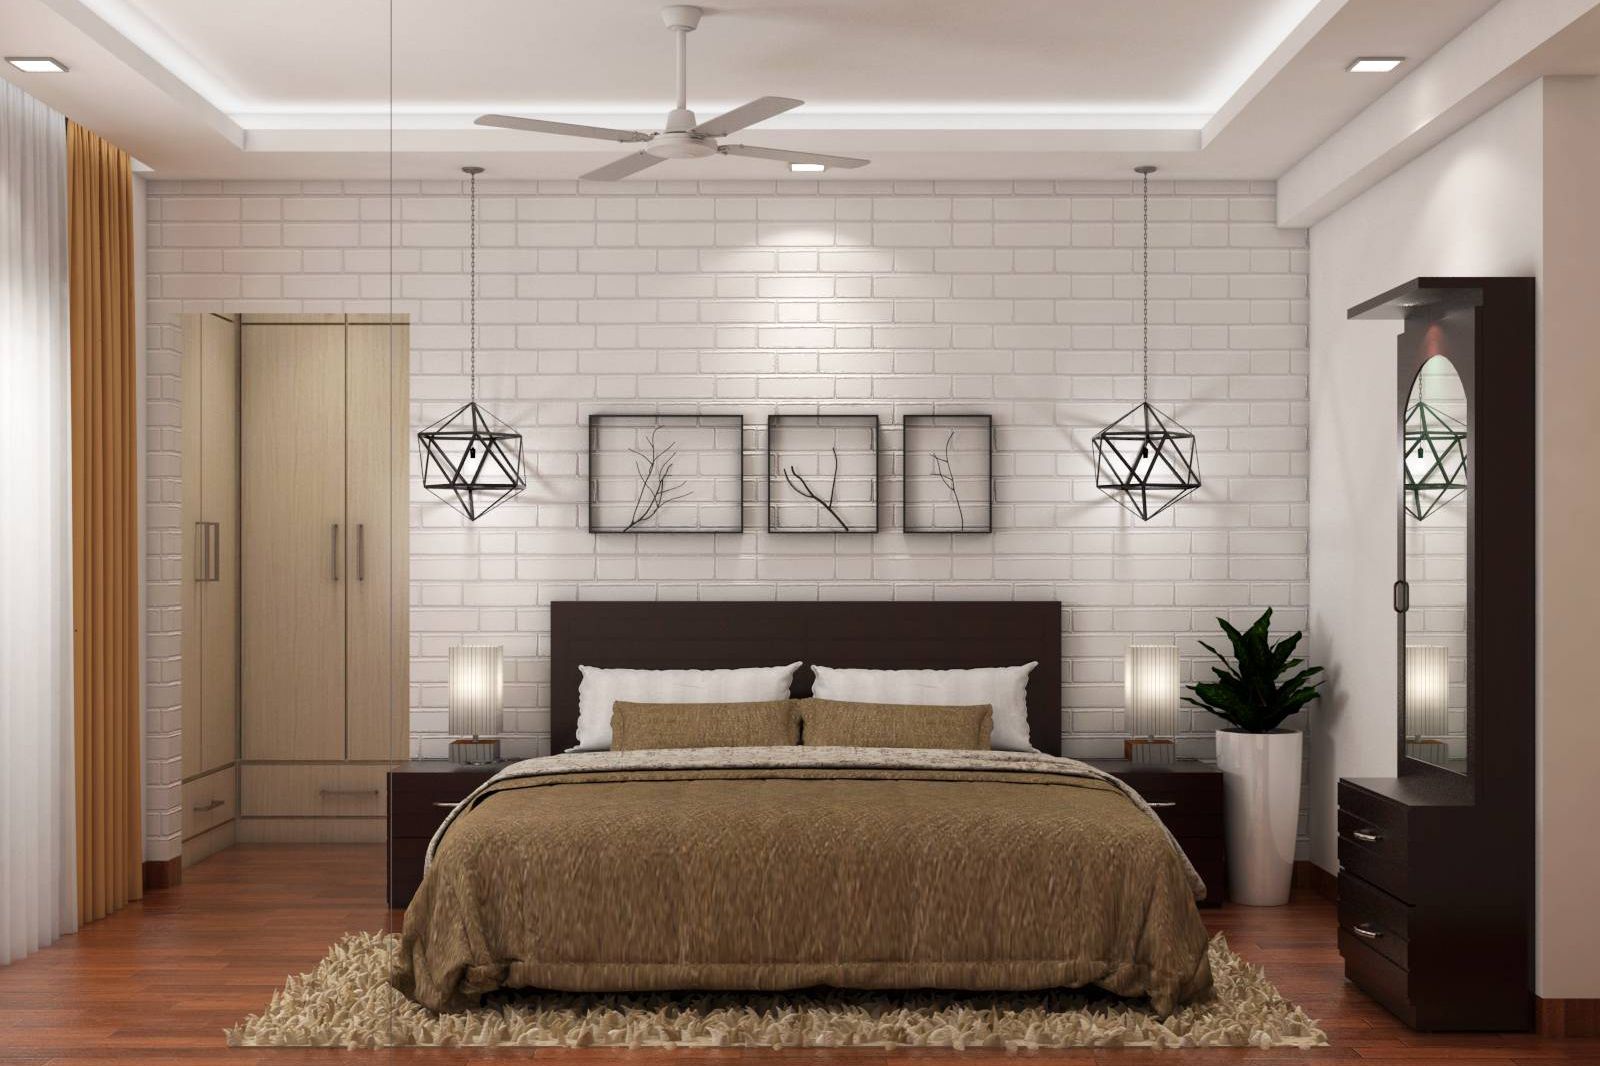 Contemporary Exposed Brick Bedroom Wallpaper Design In White